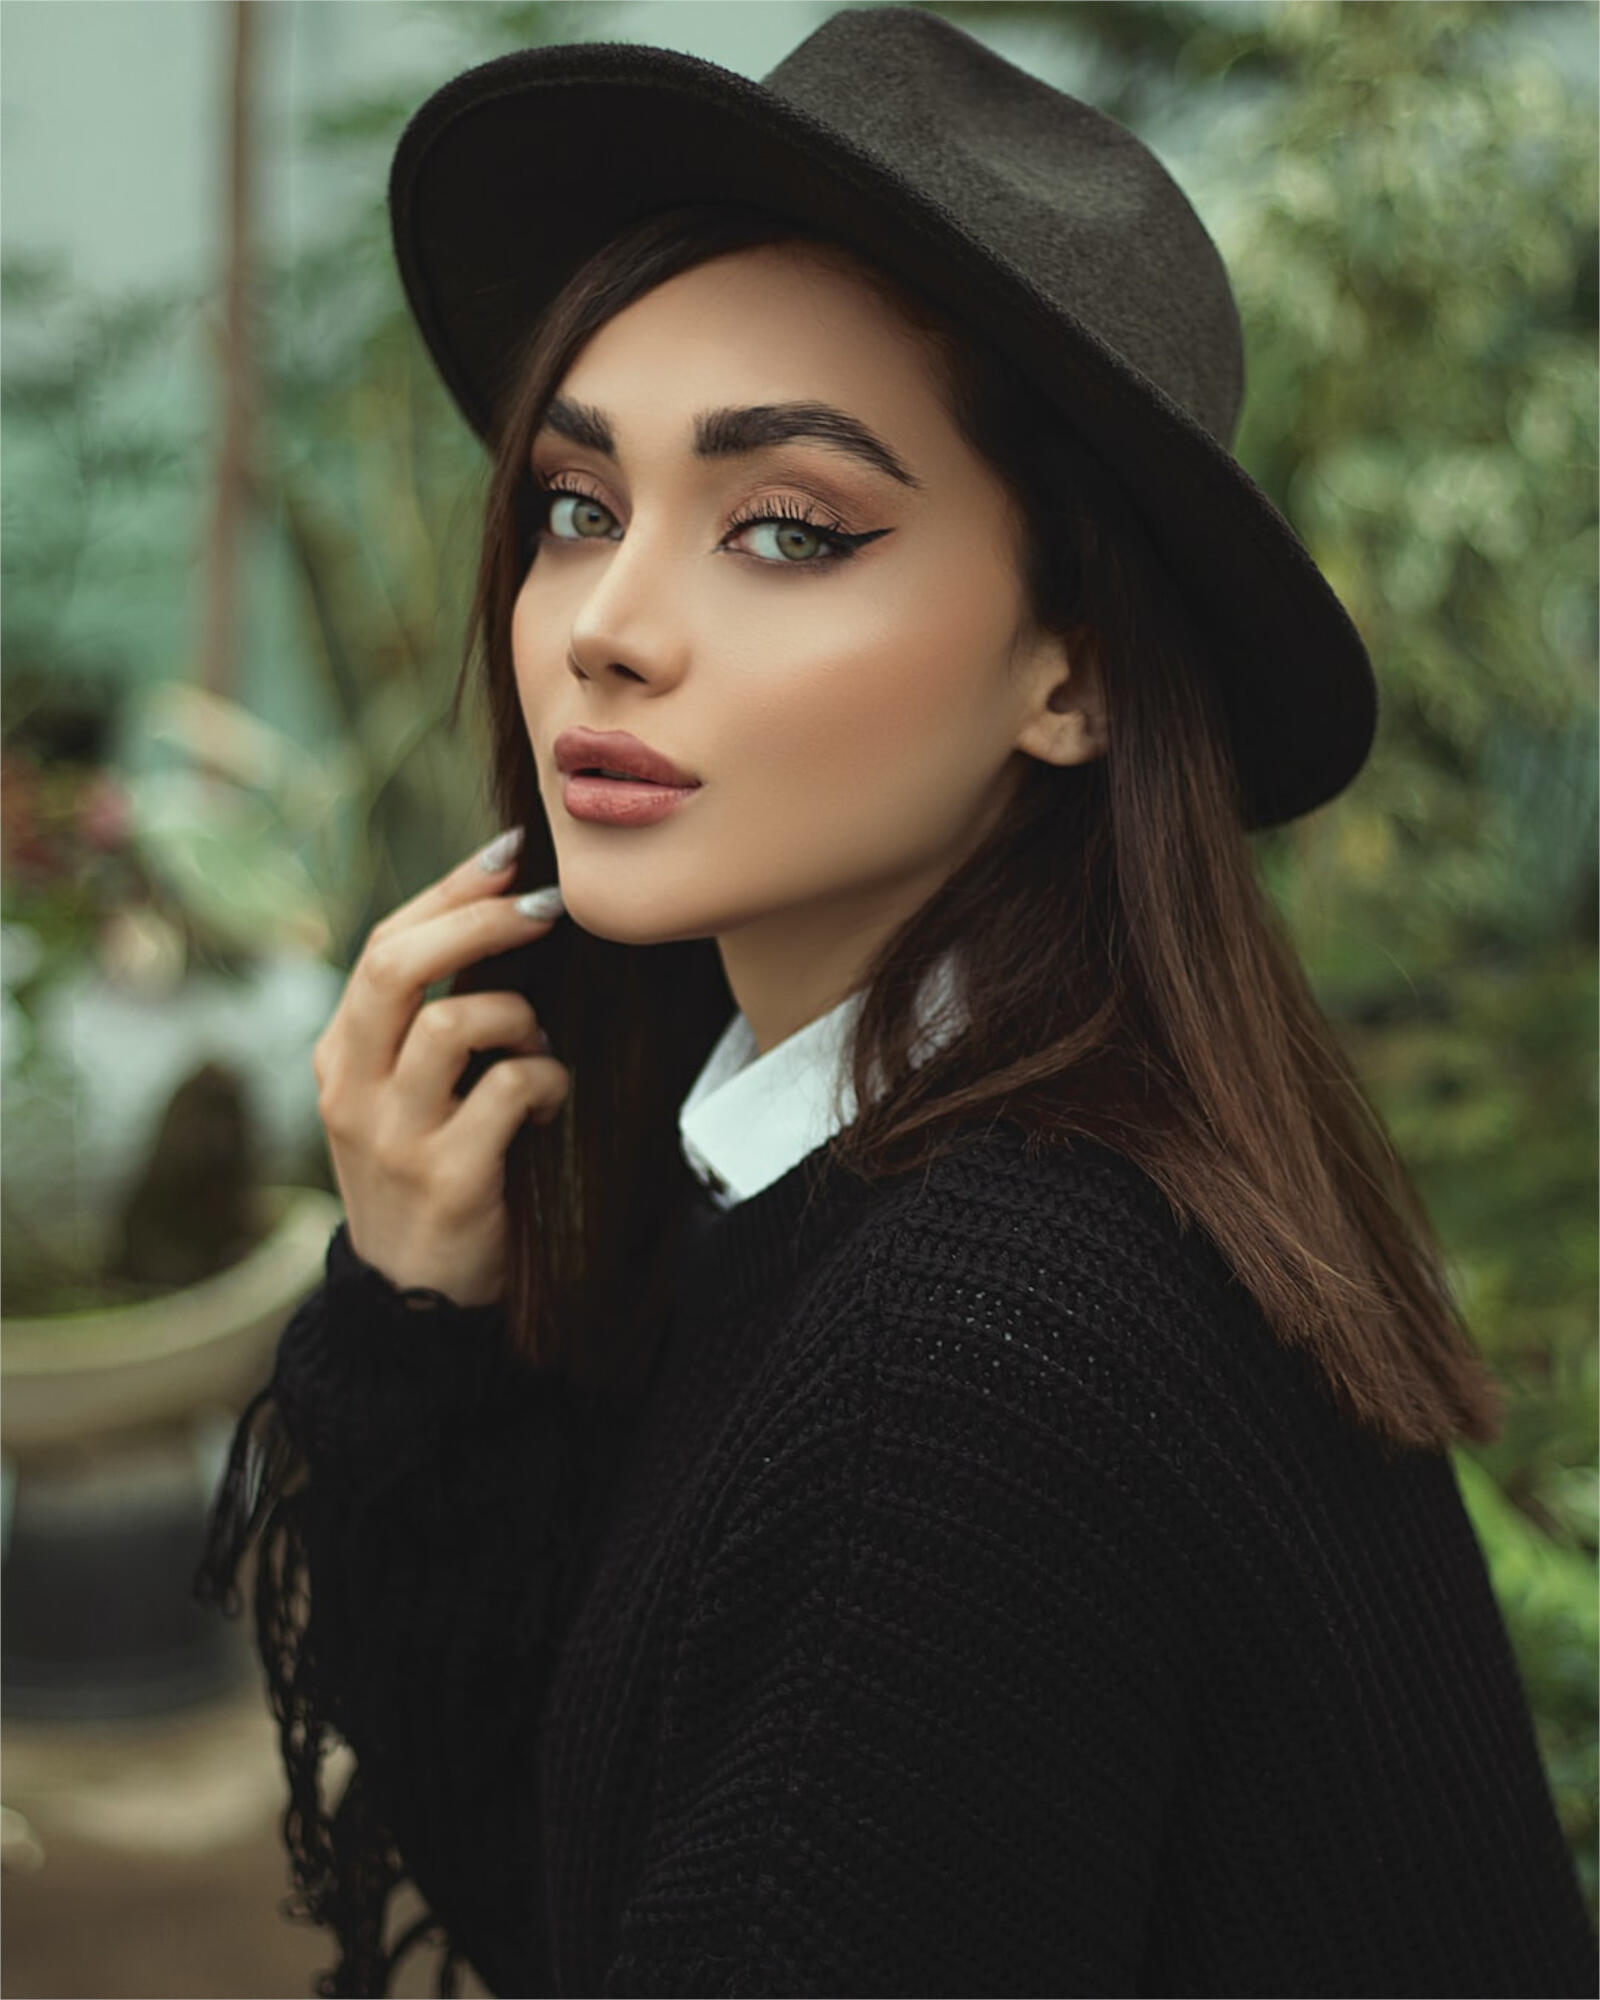 Free photo Beautiful brunette in a black hat